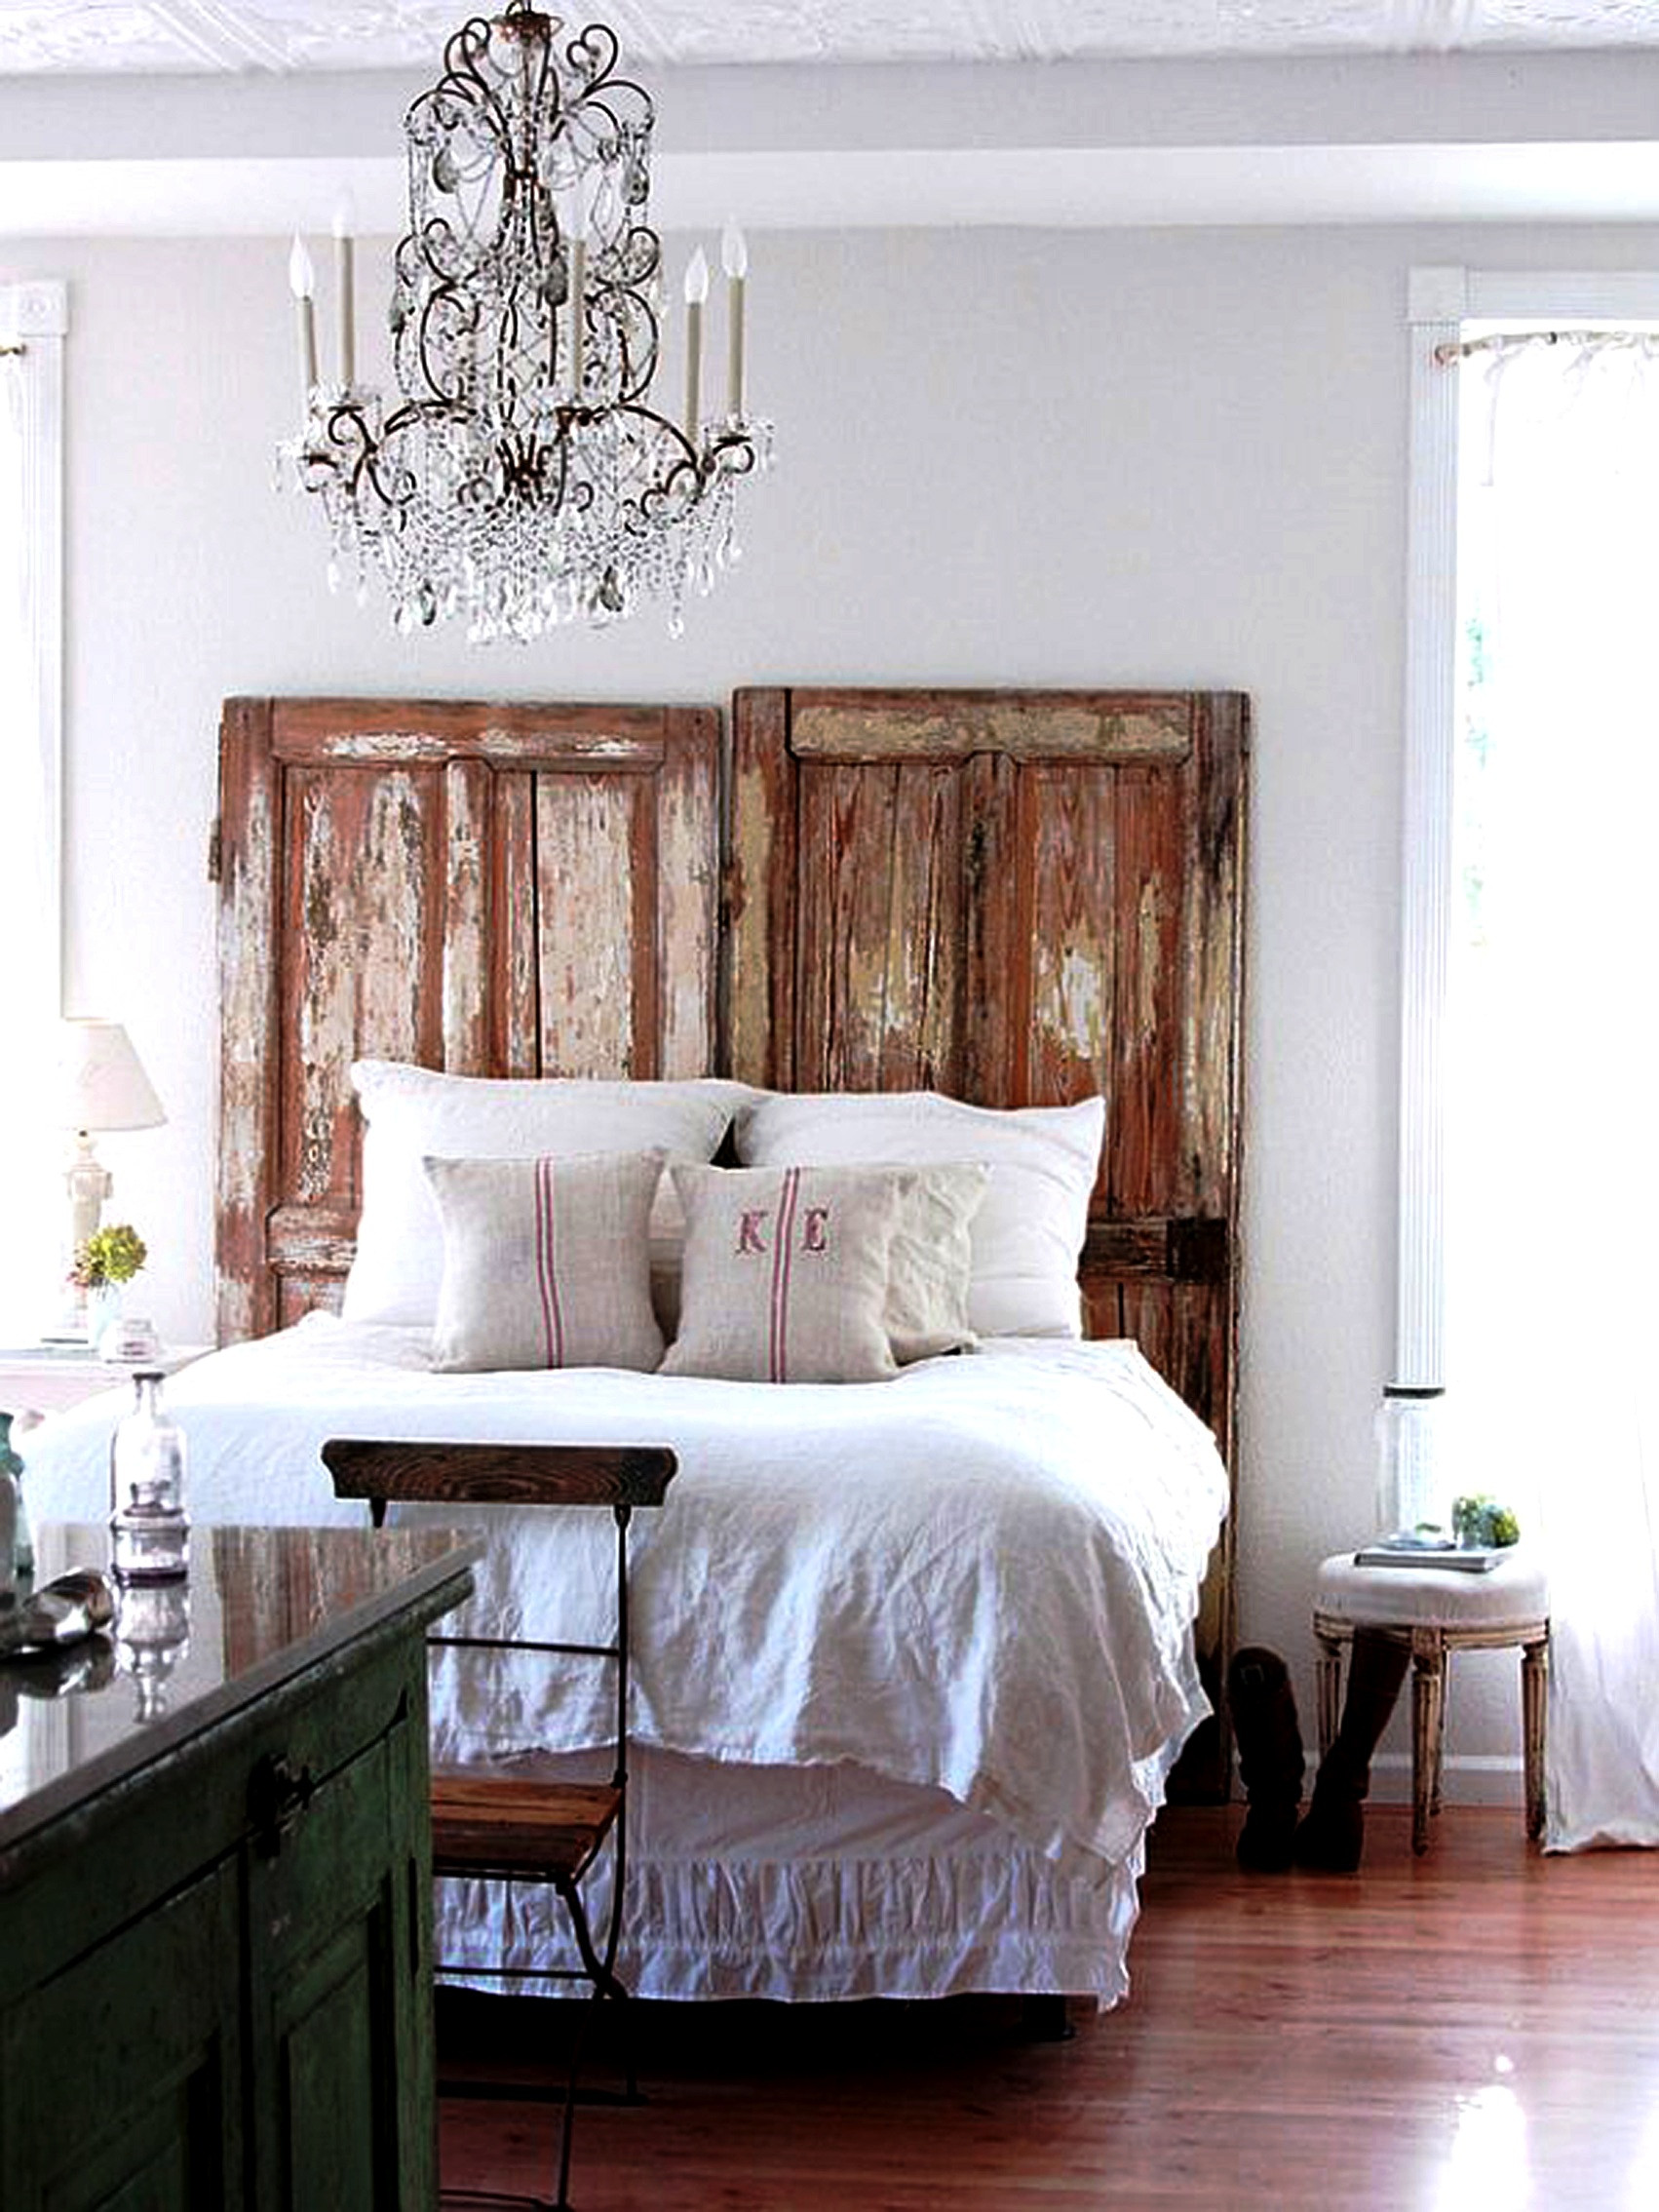 Rustic Bedroom Wall Decor
 Rustic Chic Home Decor Ideas – You Bet Your Pierogi